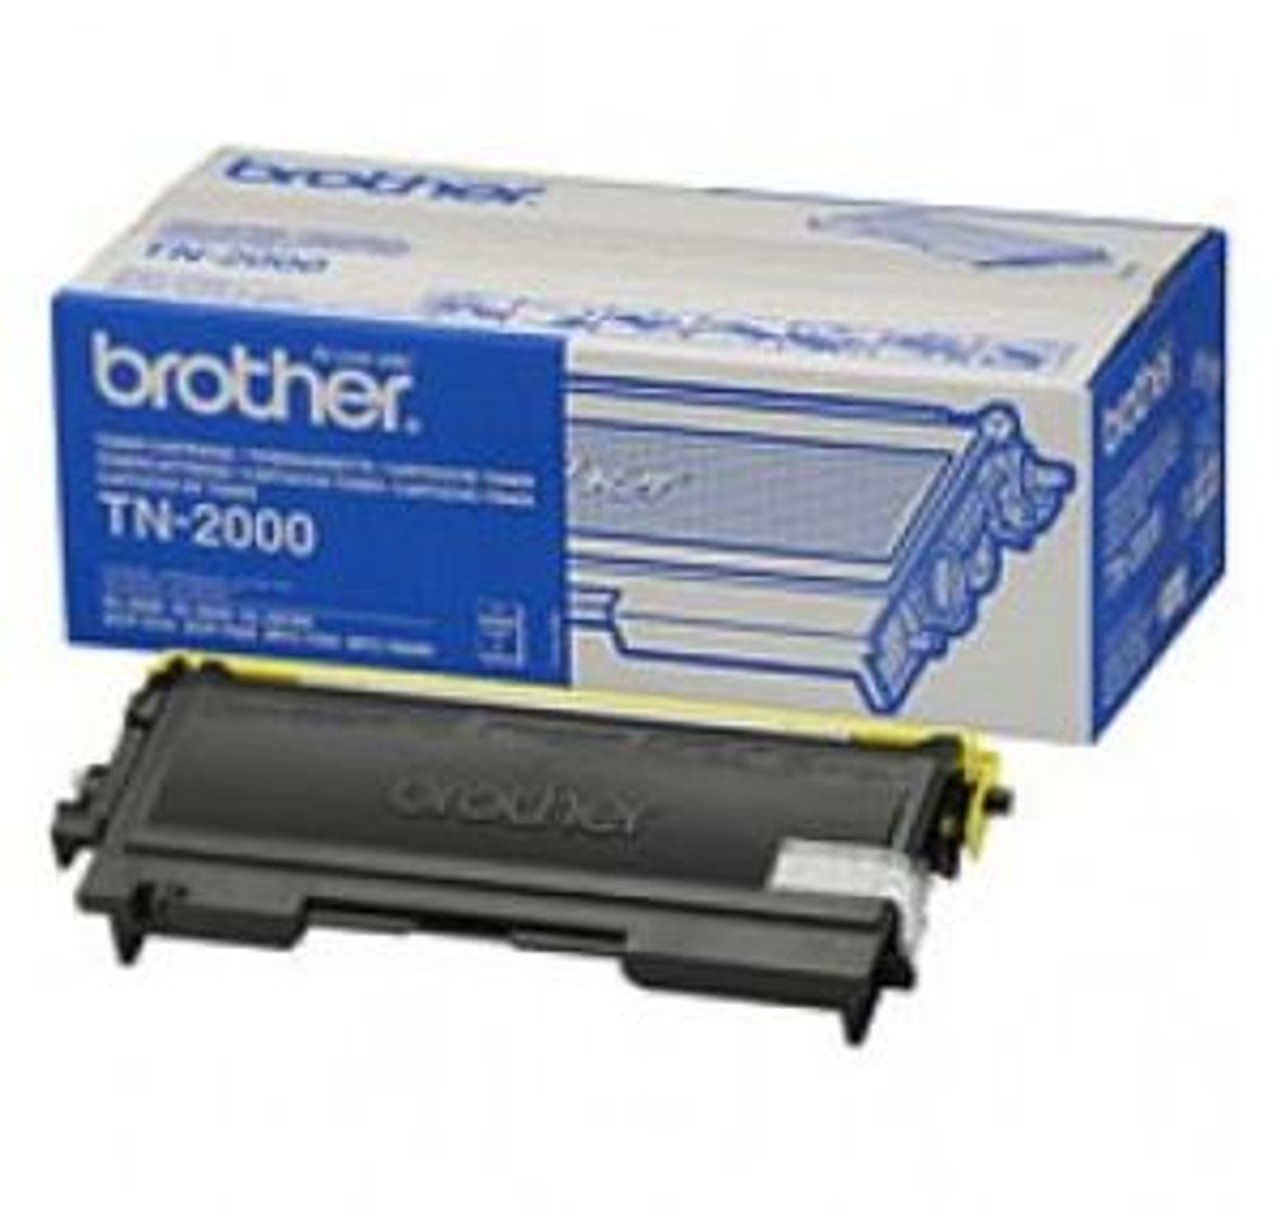 Brother Tn2000 Original Black Toner Cartridge (Tn-2000 Laser Printer Cartridge)